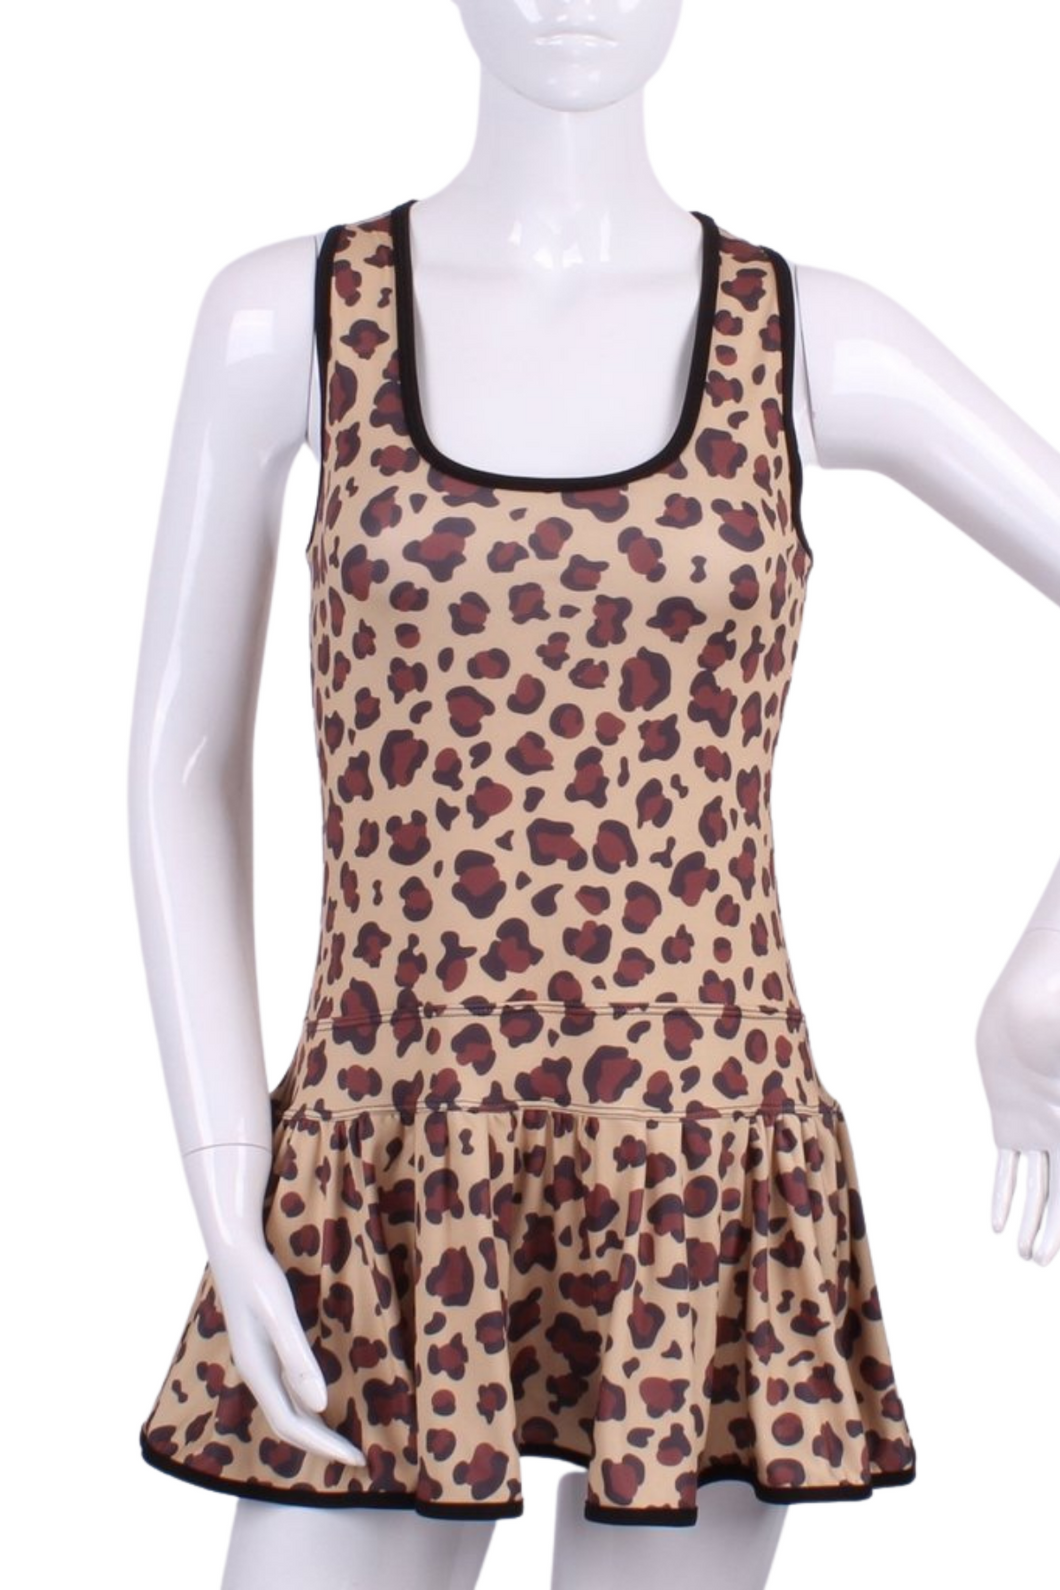 The Leopard Print Longer Sandra Dee Tennis Dress - I LOVE MY DOUBLES PARTNER!!!